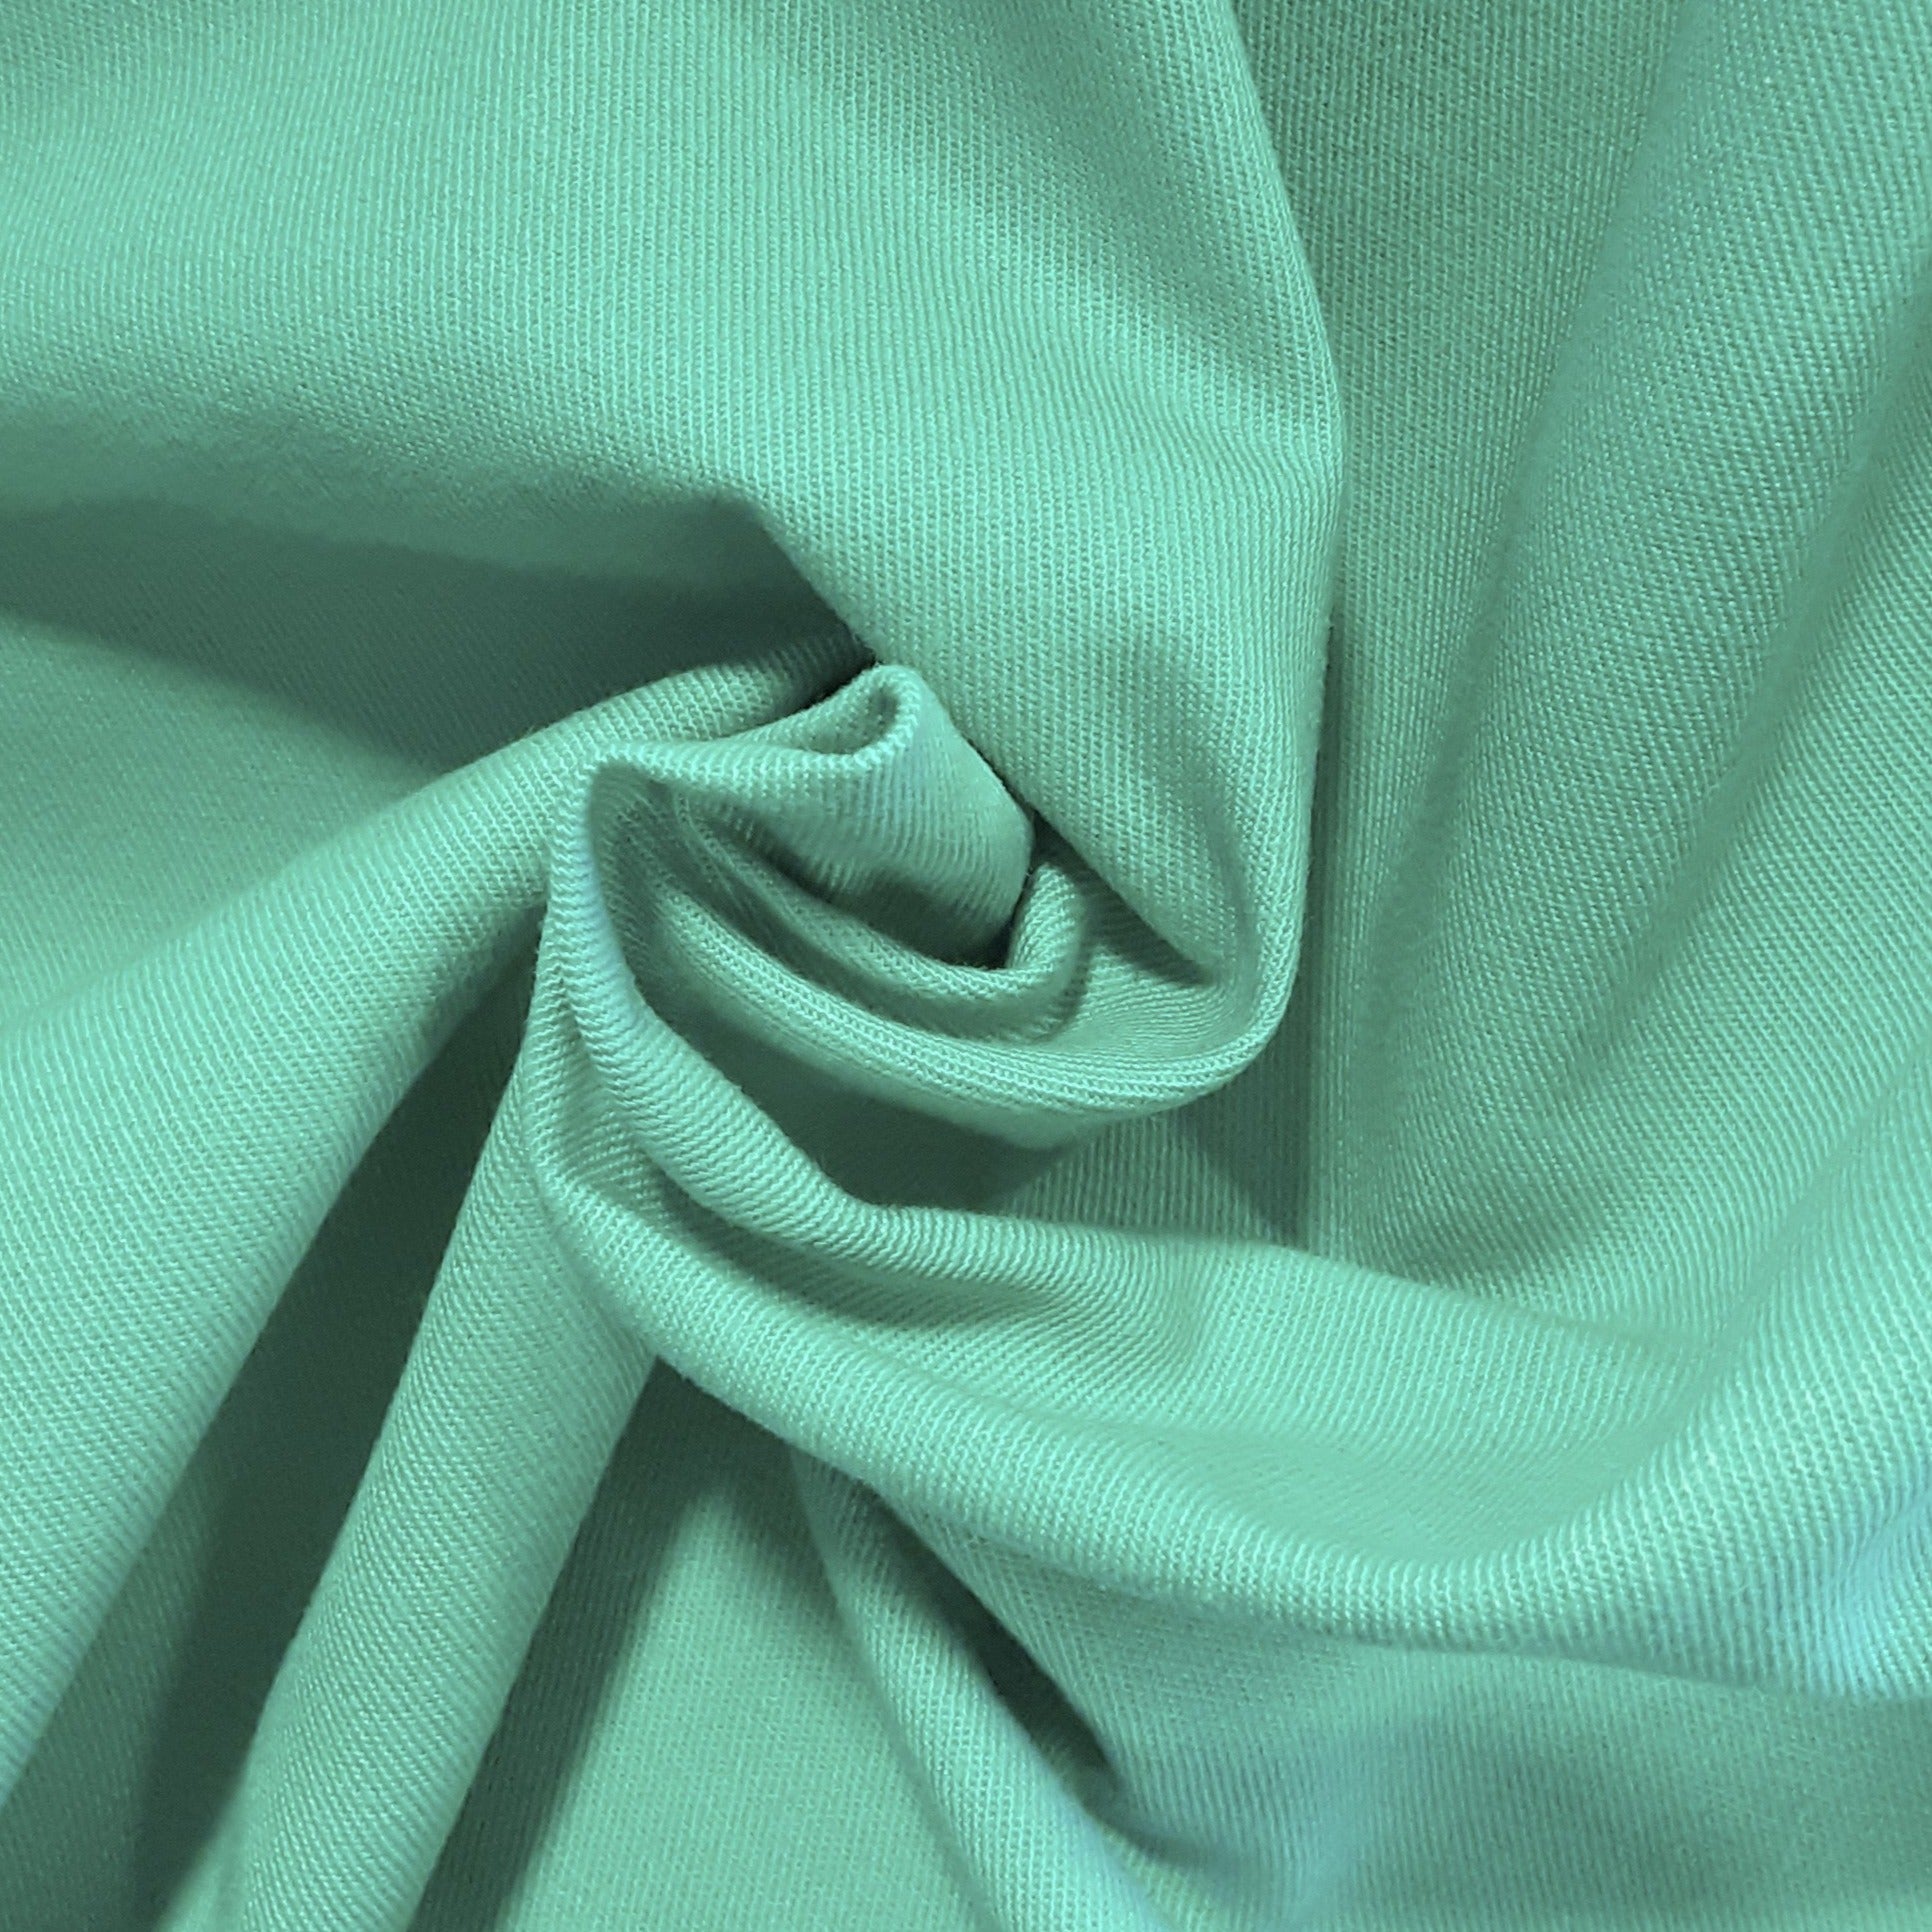 Mint #S908 Premier Cotton Twill 6.5 Ounce Woven Fabric - SKU 6932